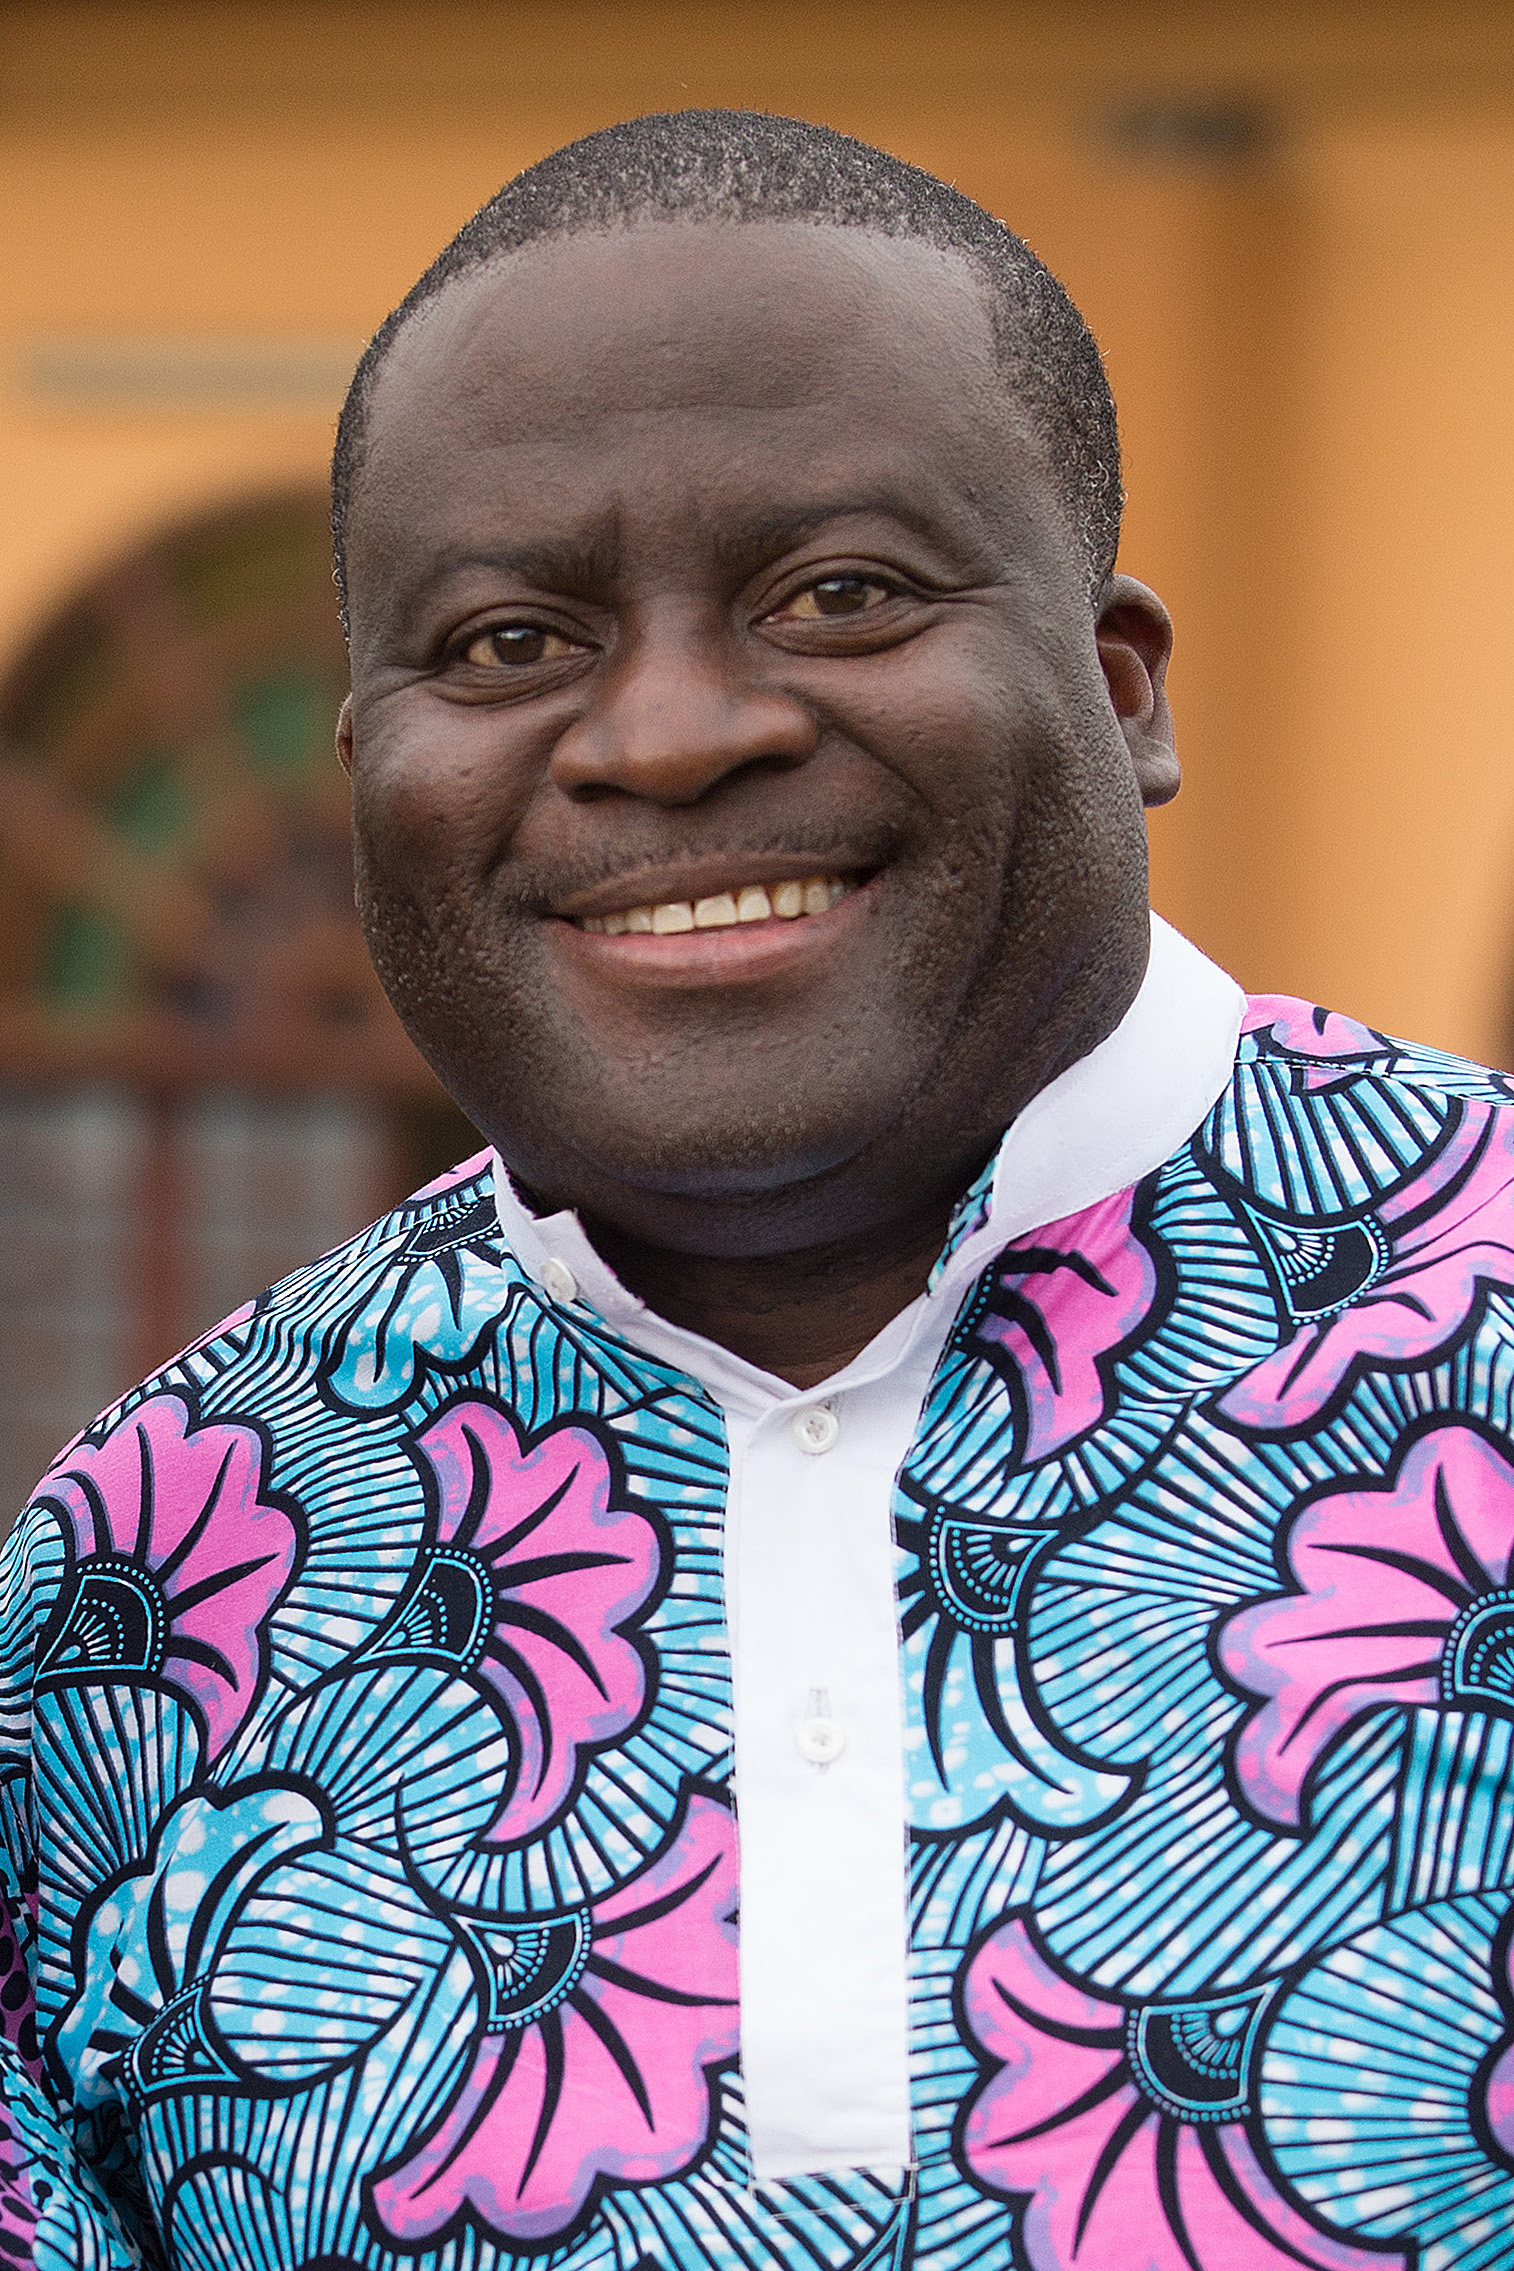 Photo of the Rev. Jean Claude Masuka Maleka by Mike DuBose, UMNS.